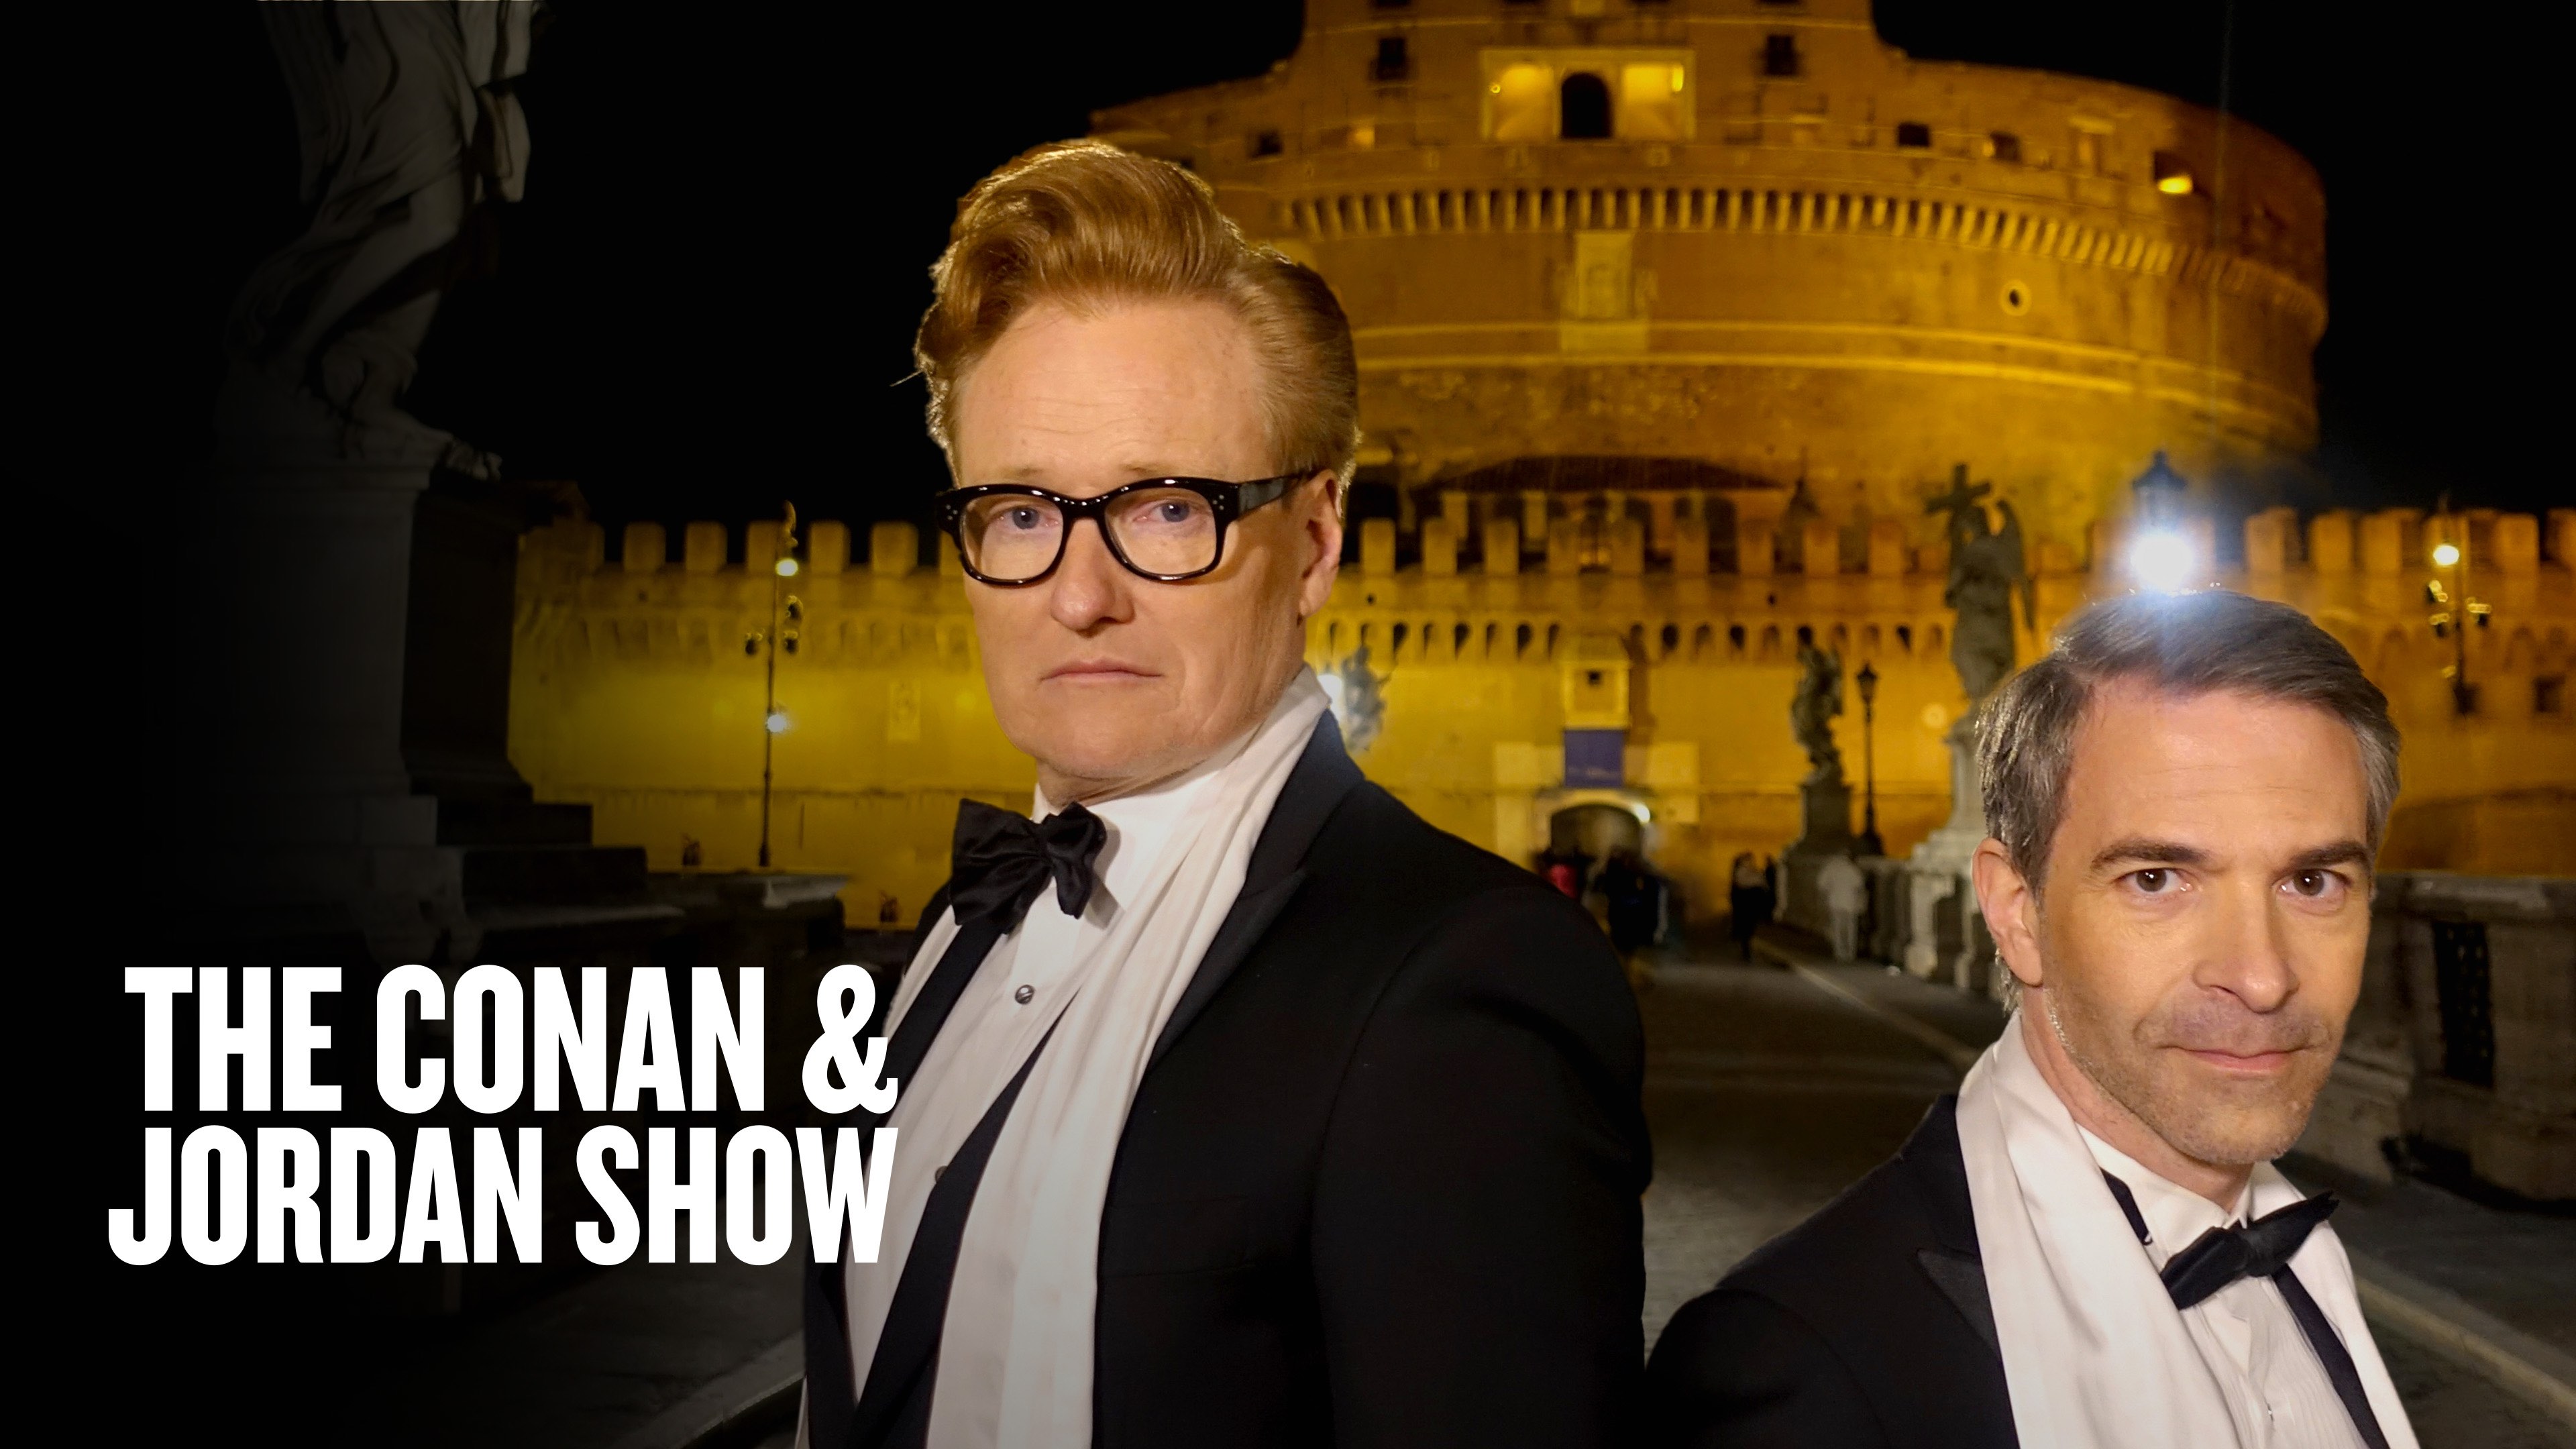 "The Conan & Jordan Show" on SiriusXM's Conan O'Brien Radio channel featuring Conan O'Brien and Jordan Schlansky